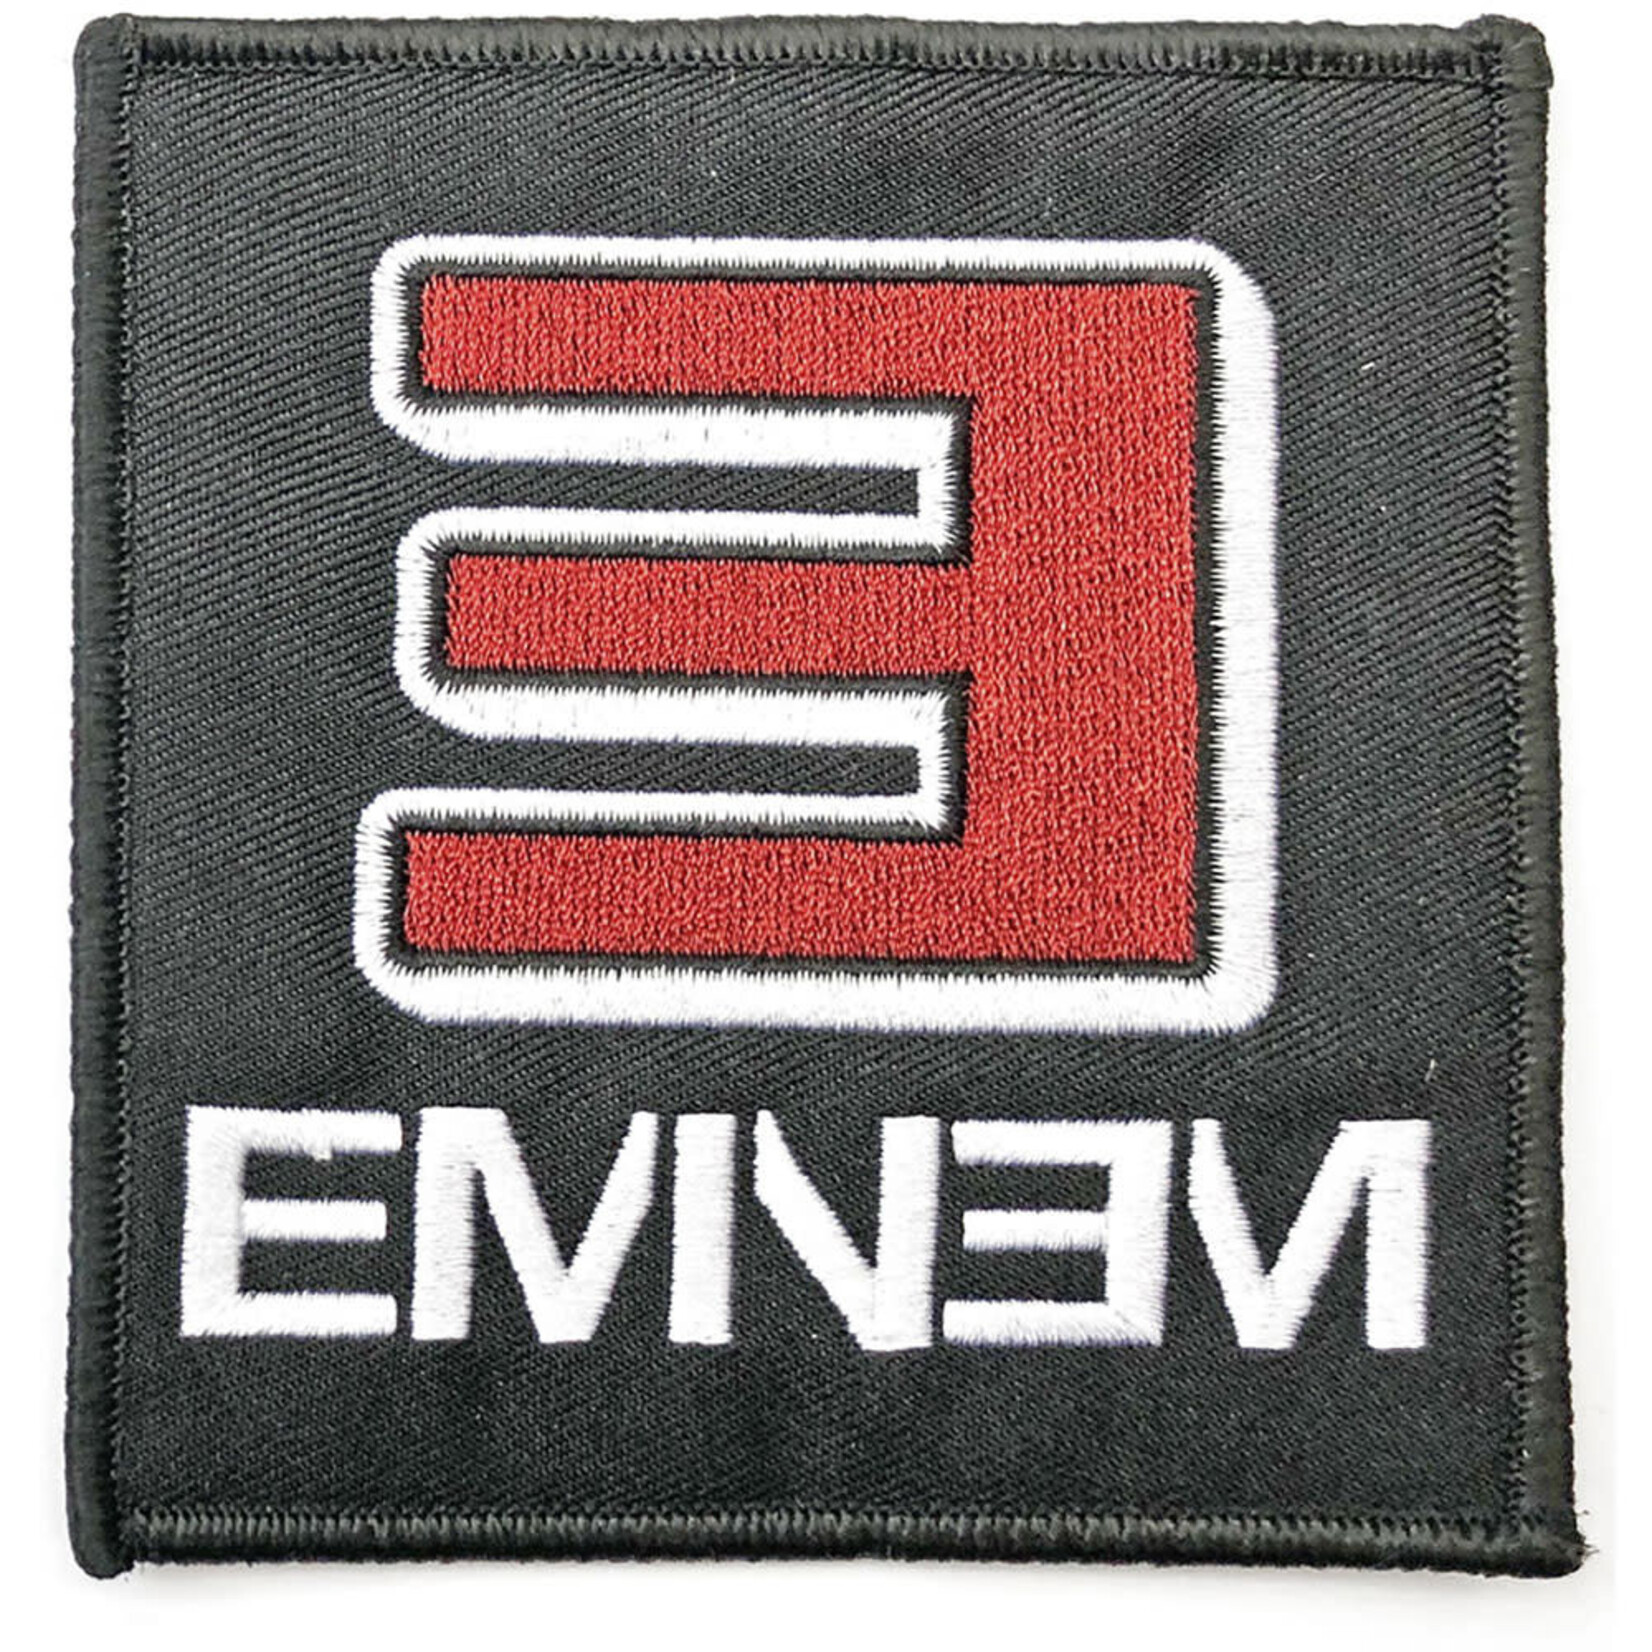 Patch - Eminem: Reversed E Logo